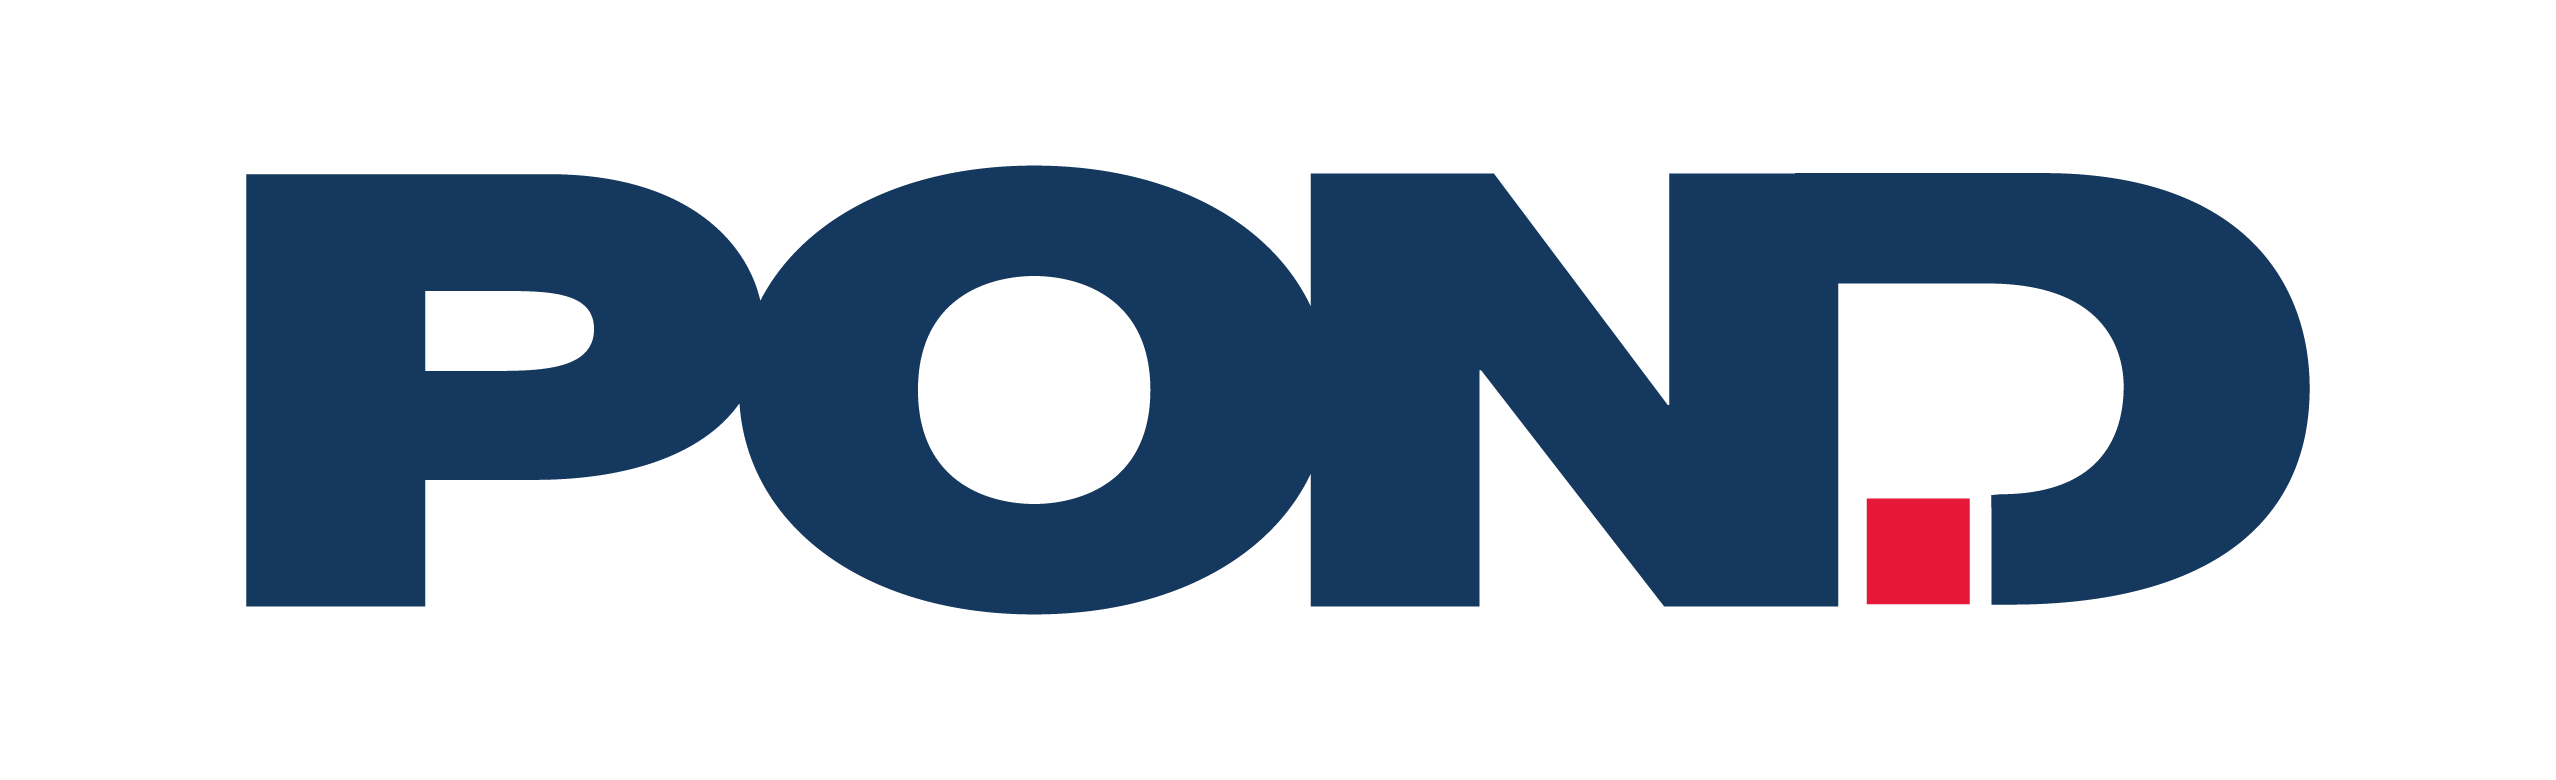 pond logo